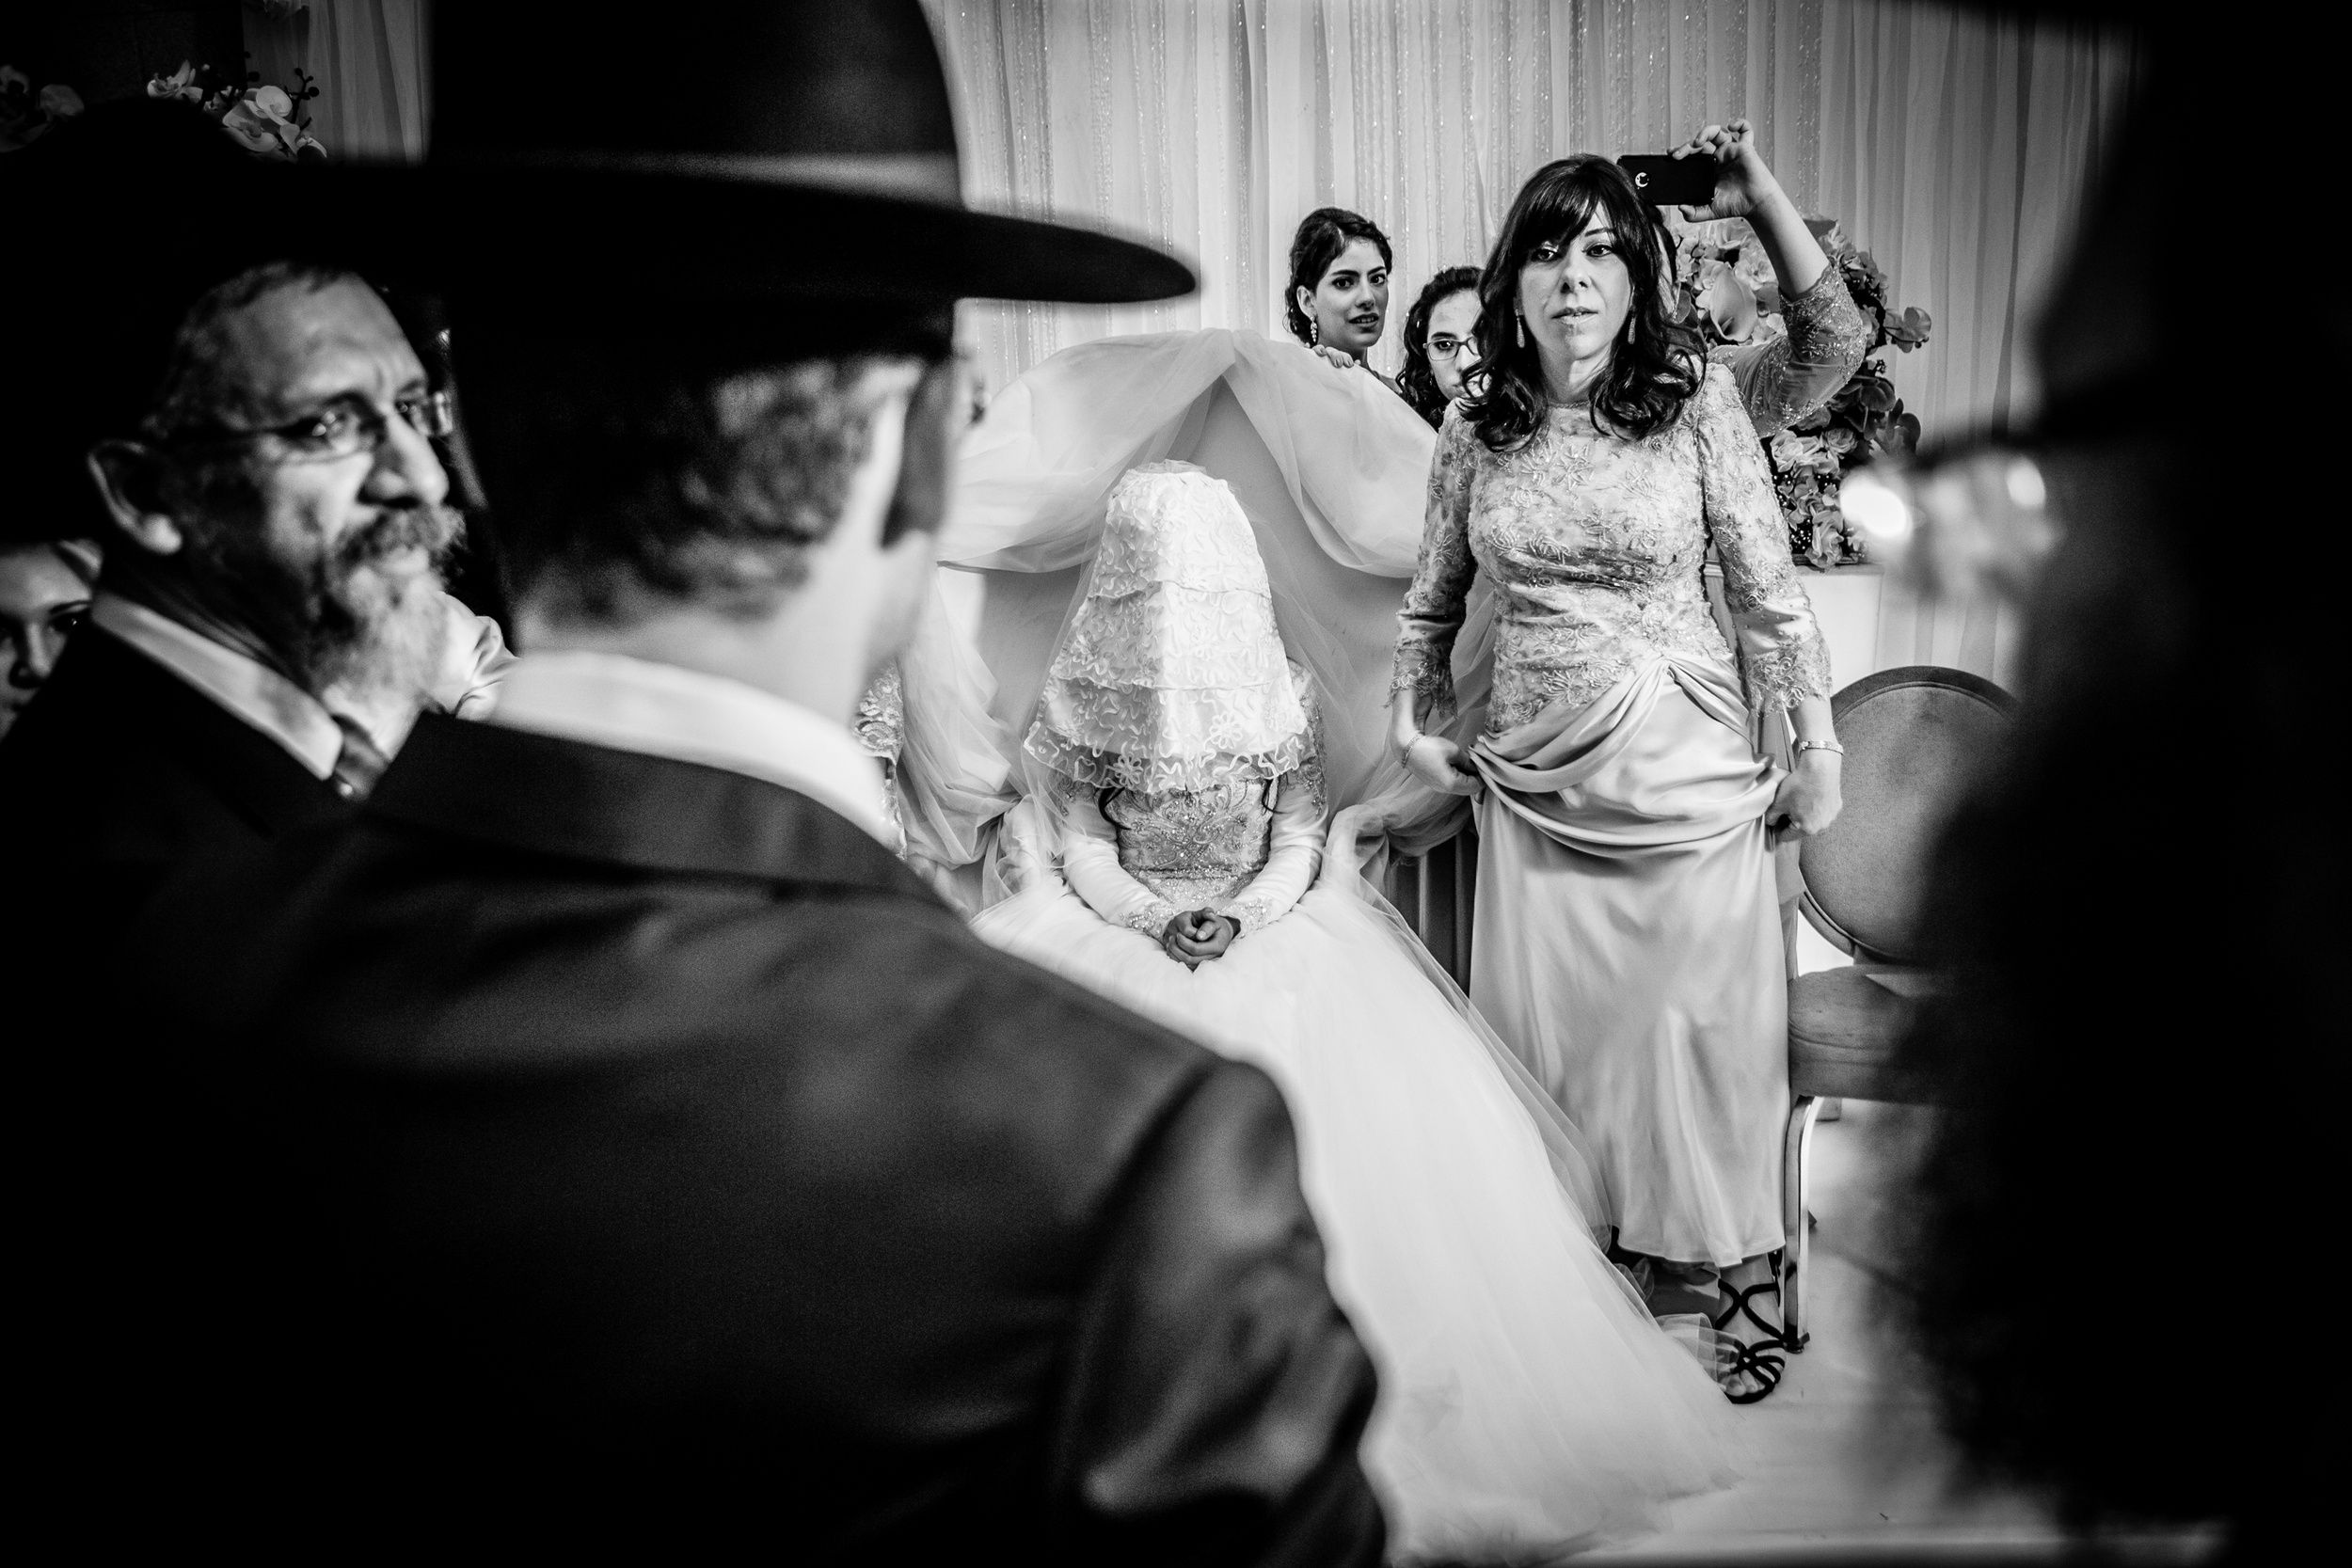 Wedding Iossi and Gitty Khafif  - Eliau Piha studio photography, new york, events, people 770 brooklyn -0339.jpg